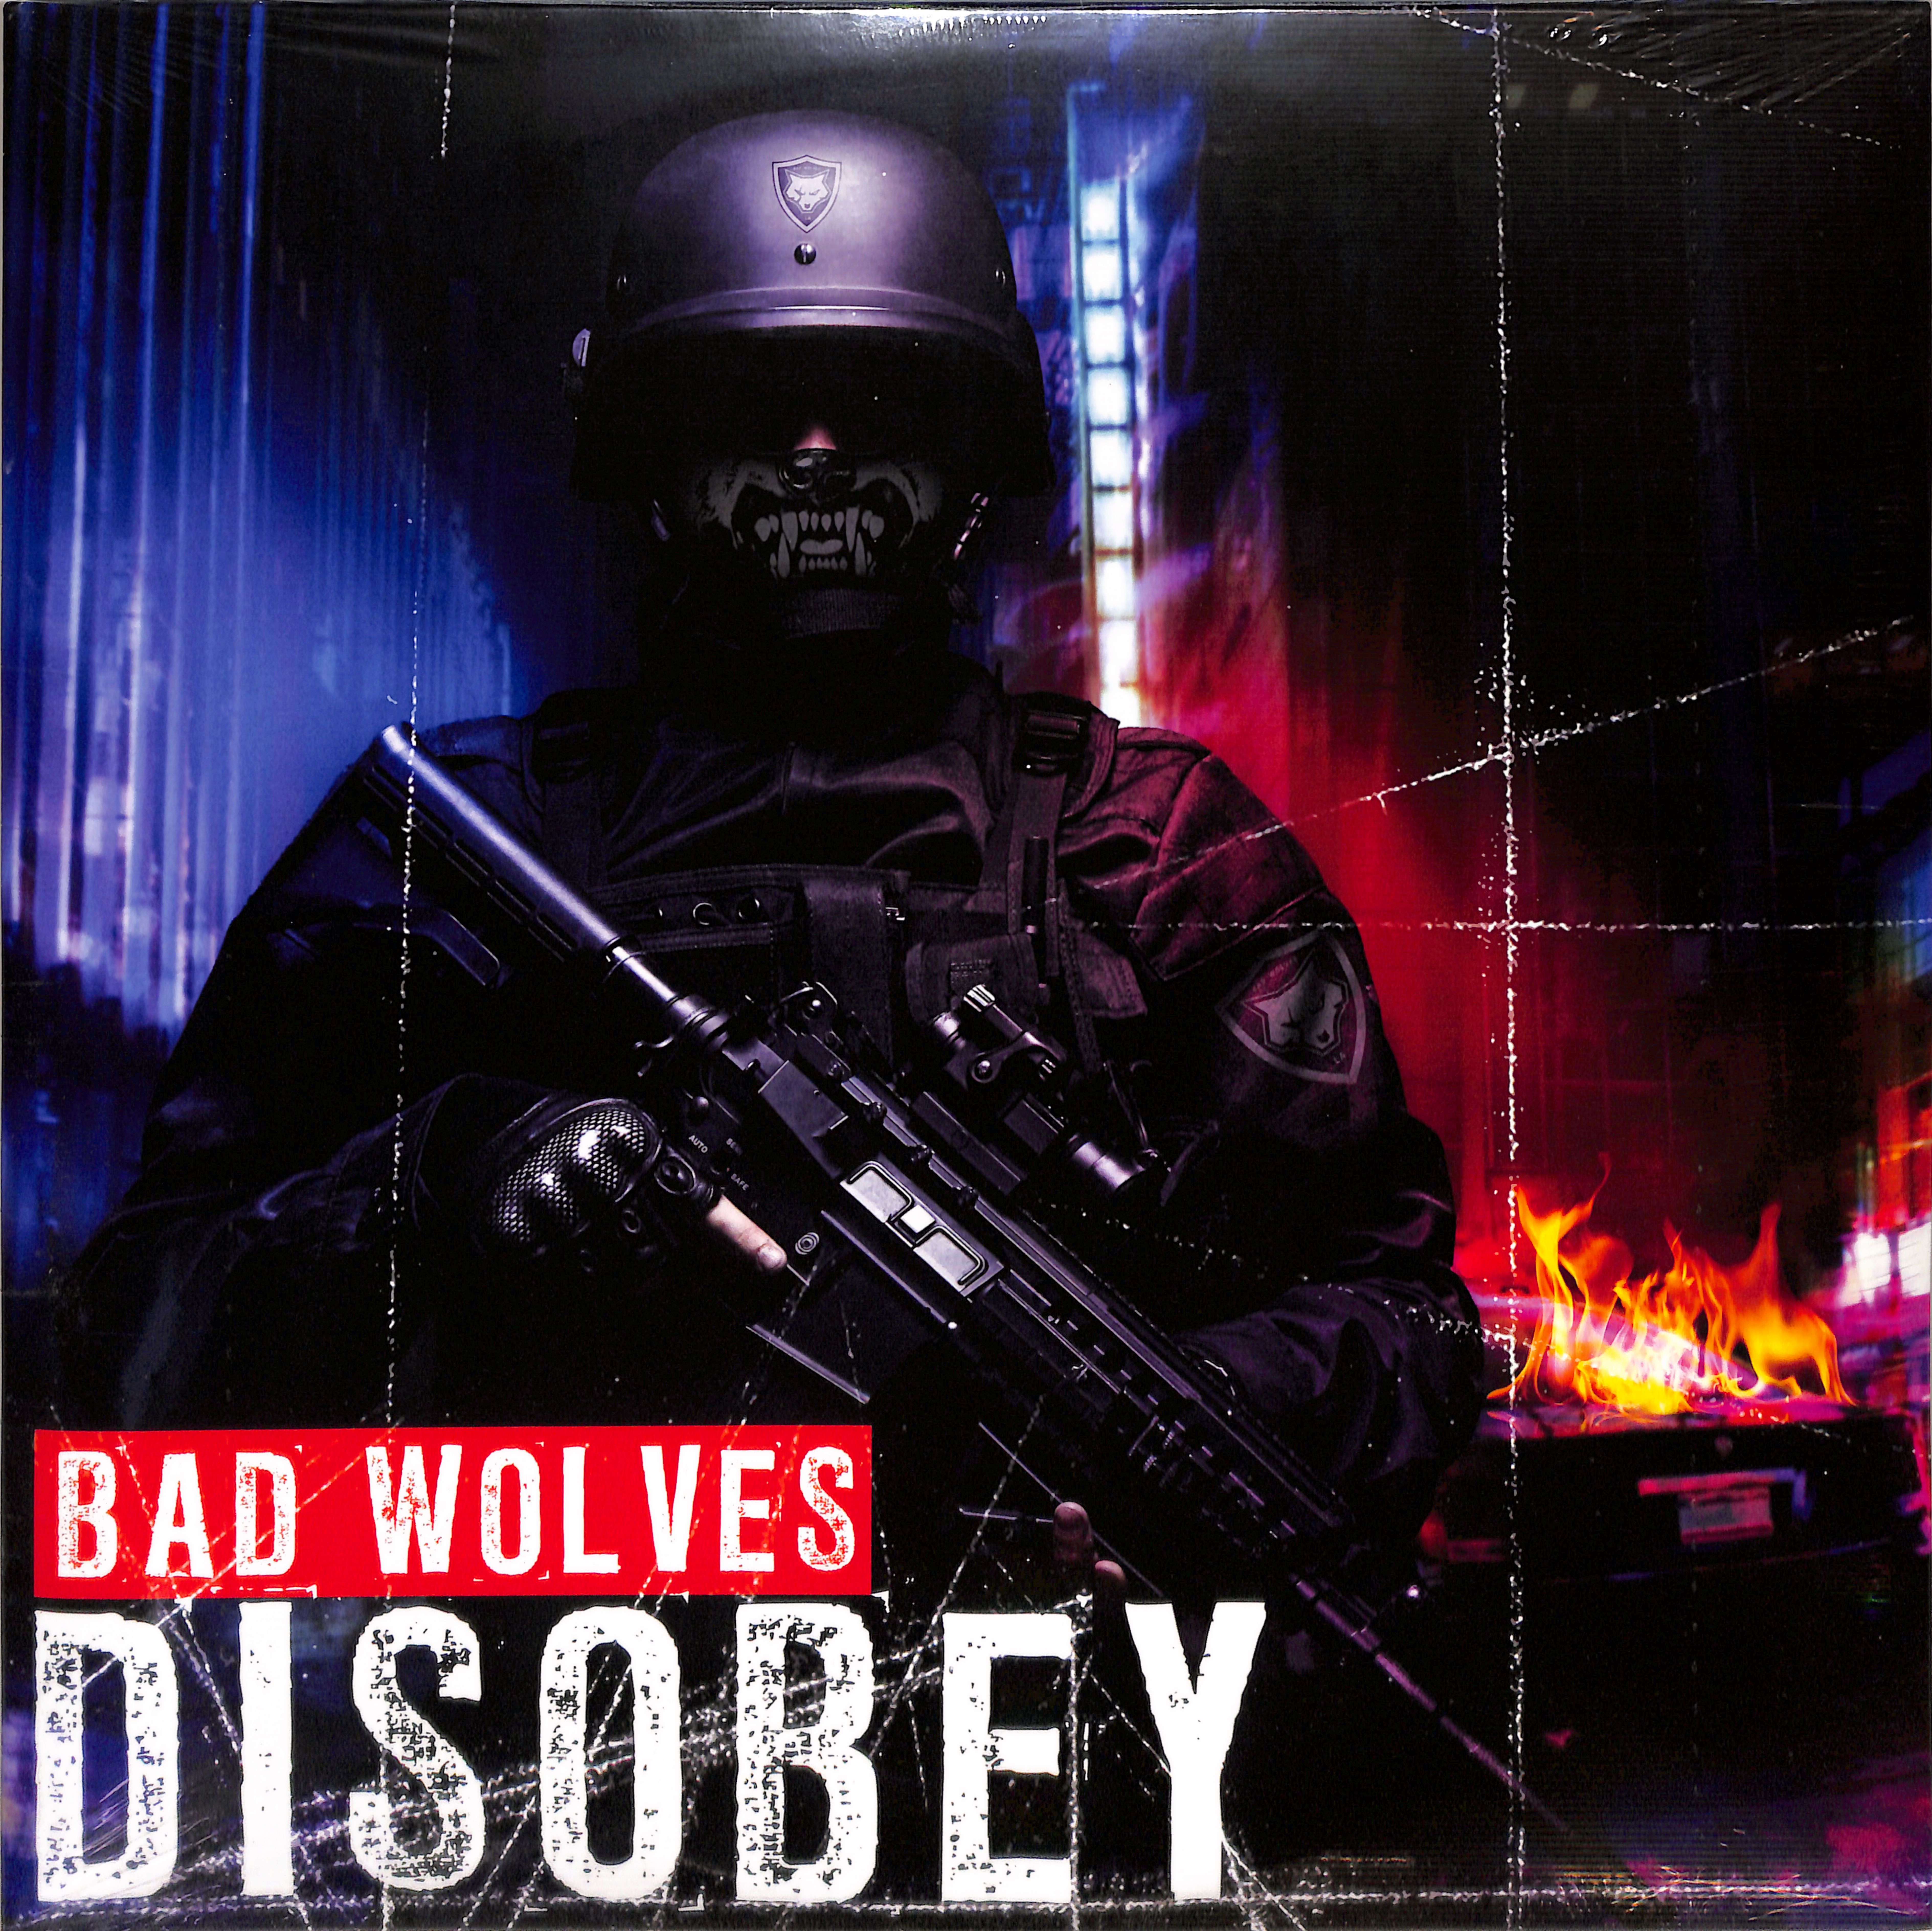 Bad wolves песни. Bad Wolves Disobey. Bad Wolves альбом. Bad Wolves_Disobey [2018]. Bad Wolves обложки альбомов.